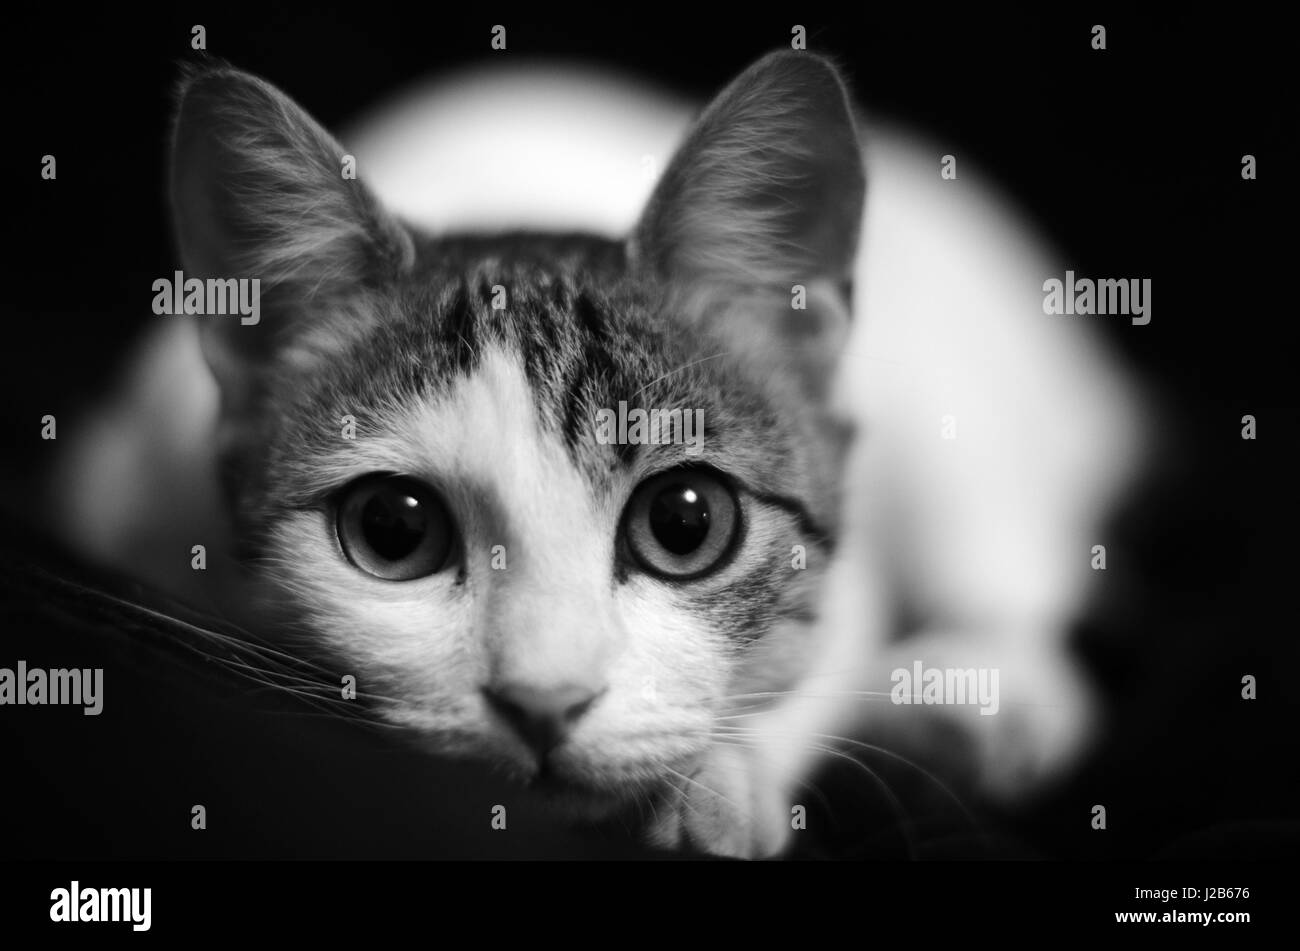 cat face portrait. veterinary Stock Photo